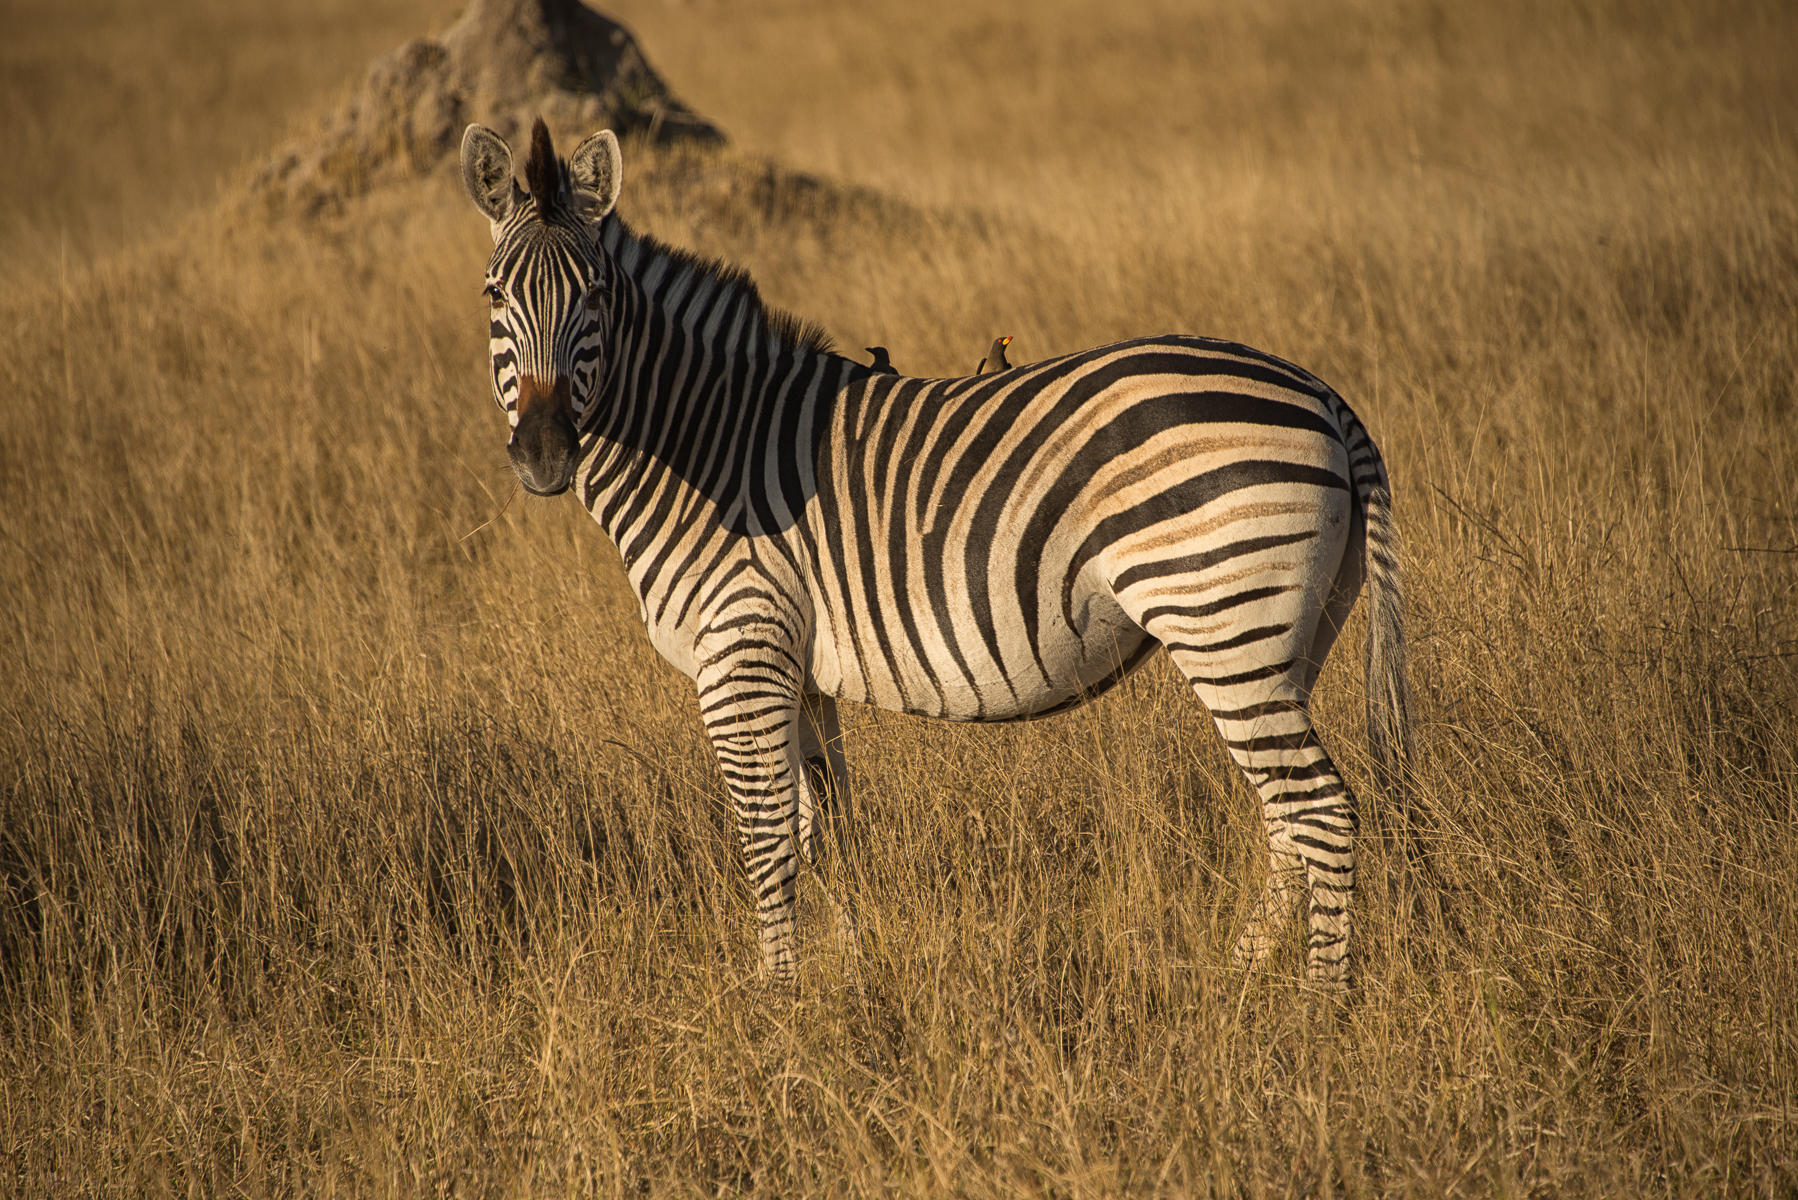 Zebra and Oxpecker's : Zimbabwe, Where Elephants Reign : ELIZABETH SANJUAN PHOTOGRAPHY